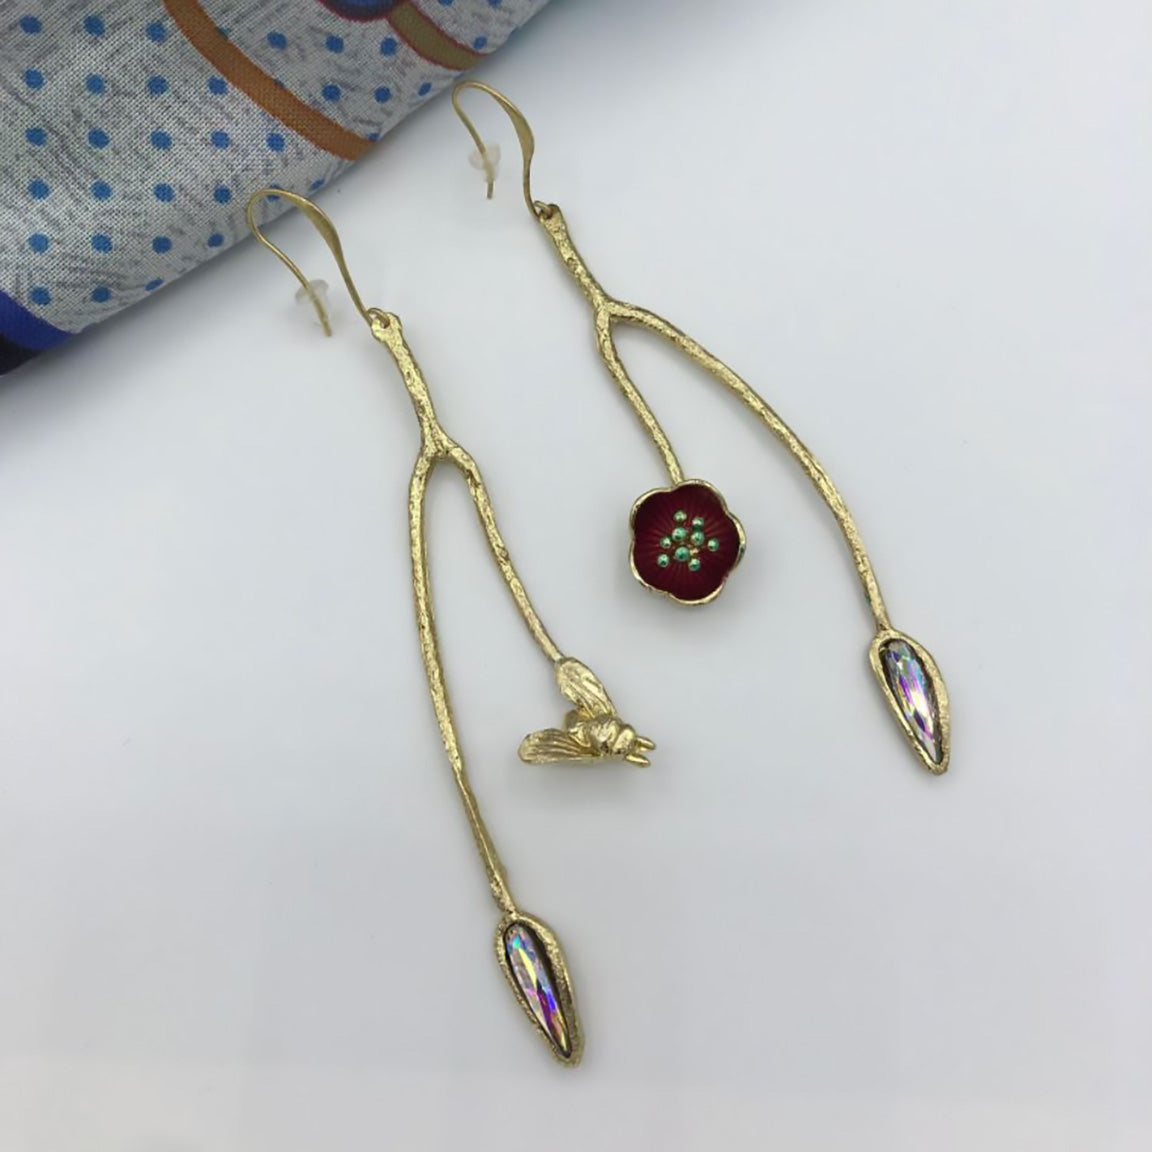 Kalliope Long Asymmetrical Earrings / Brass, Swarovski Crystals, Enamel / Red, Iridescent / Flowerfly-1